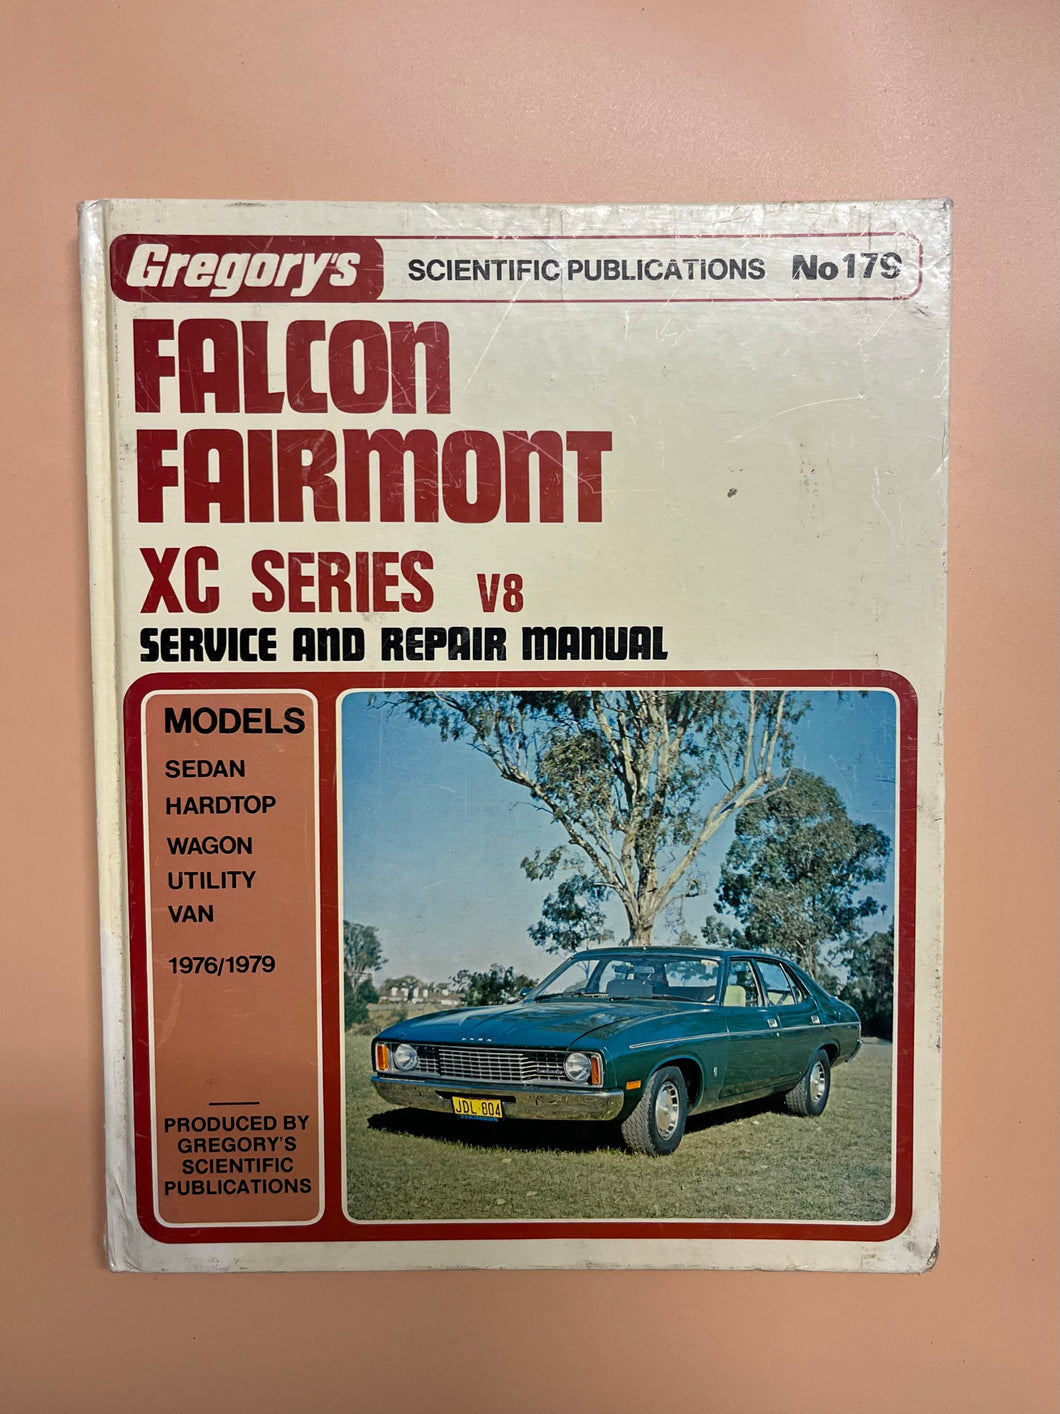 1976/1979 Falcon Fairmont XC V8 Service and Repair Manual